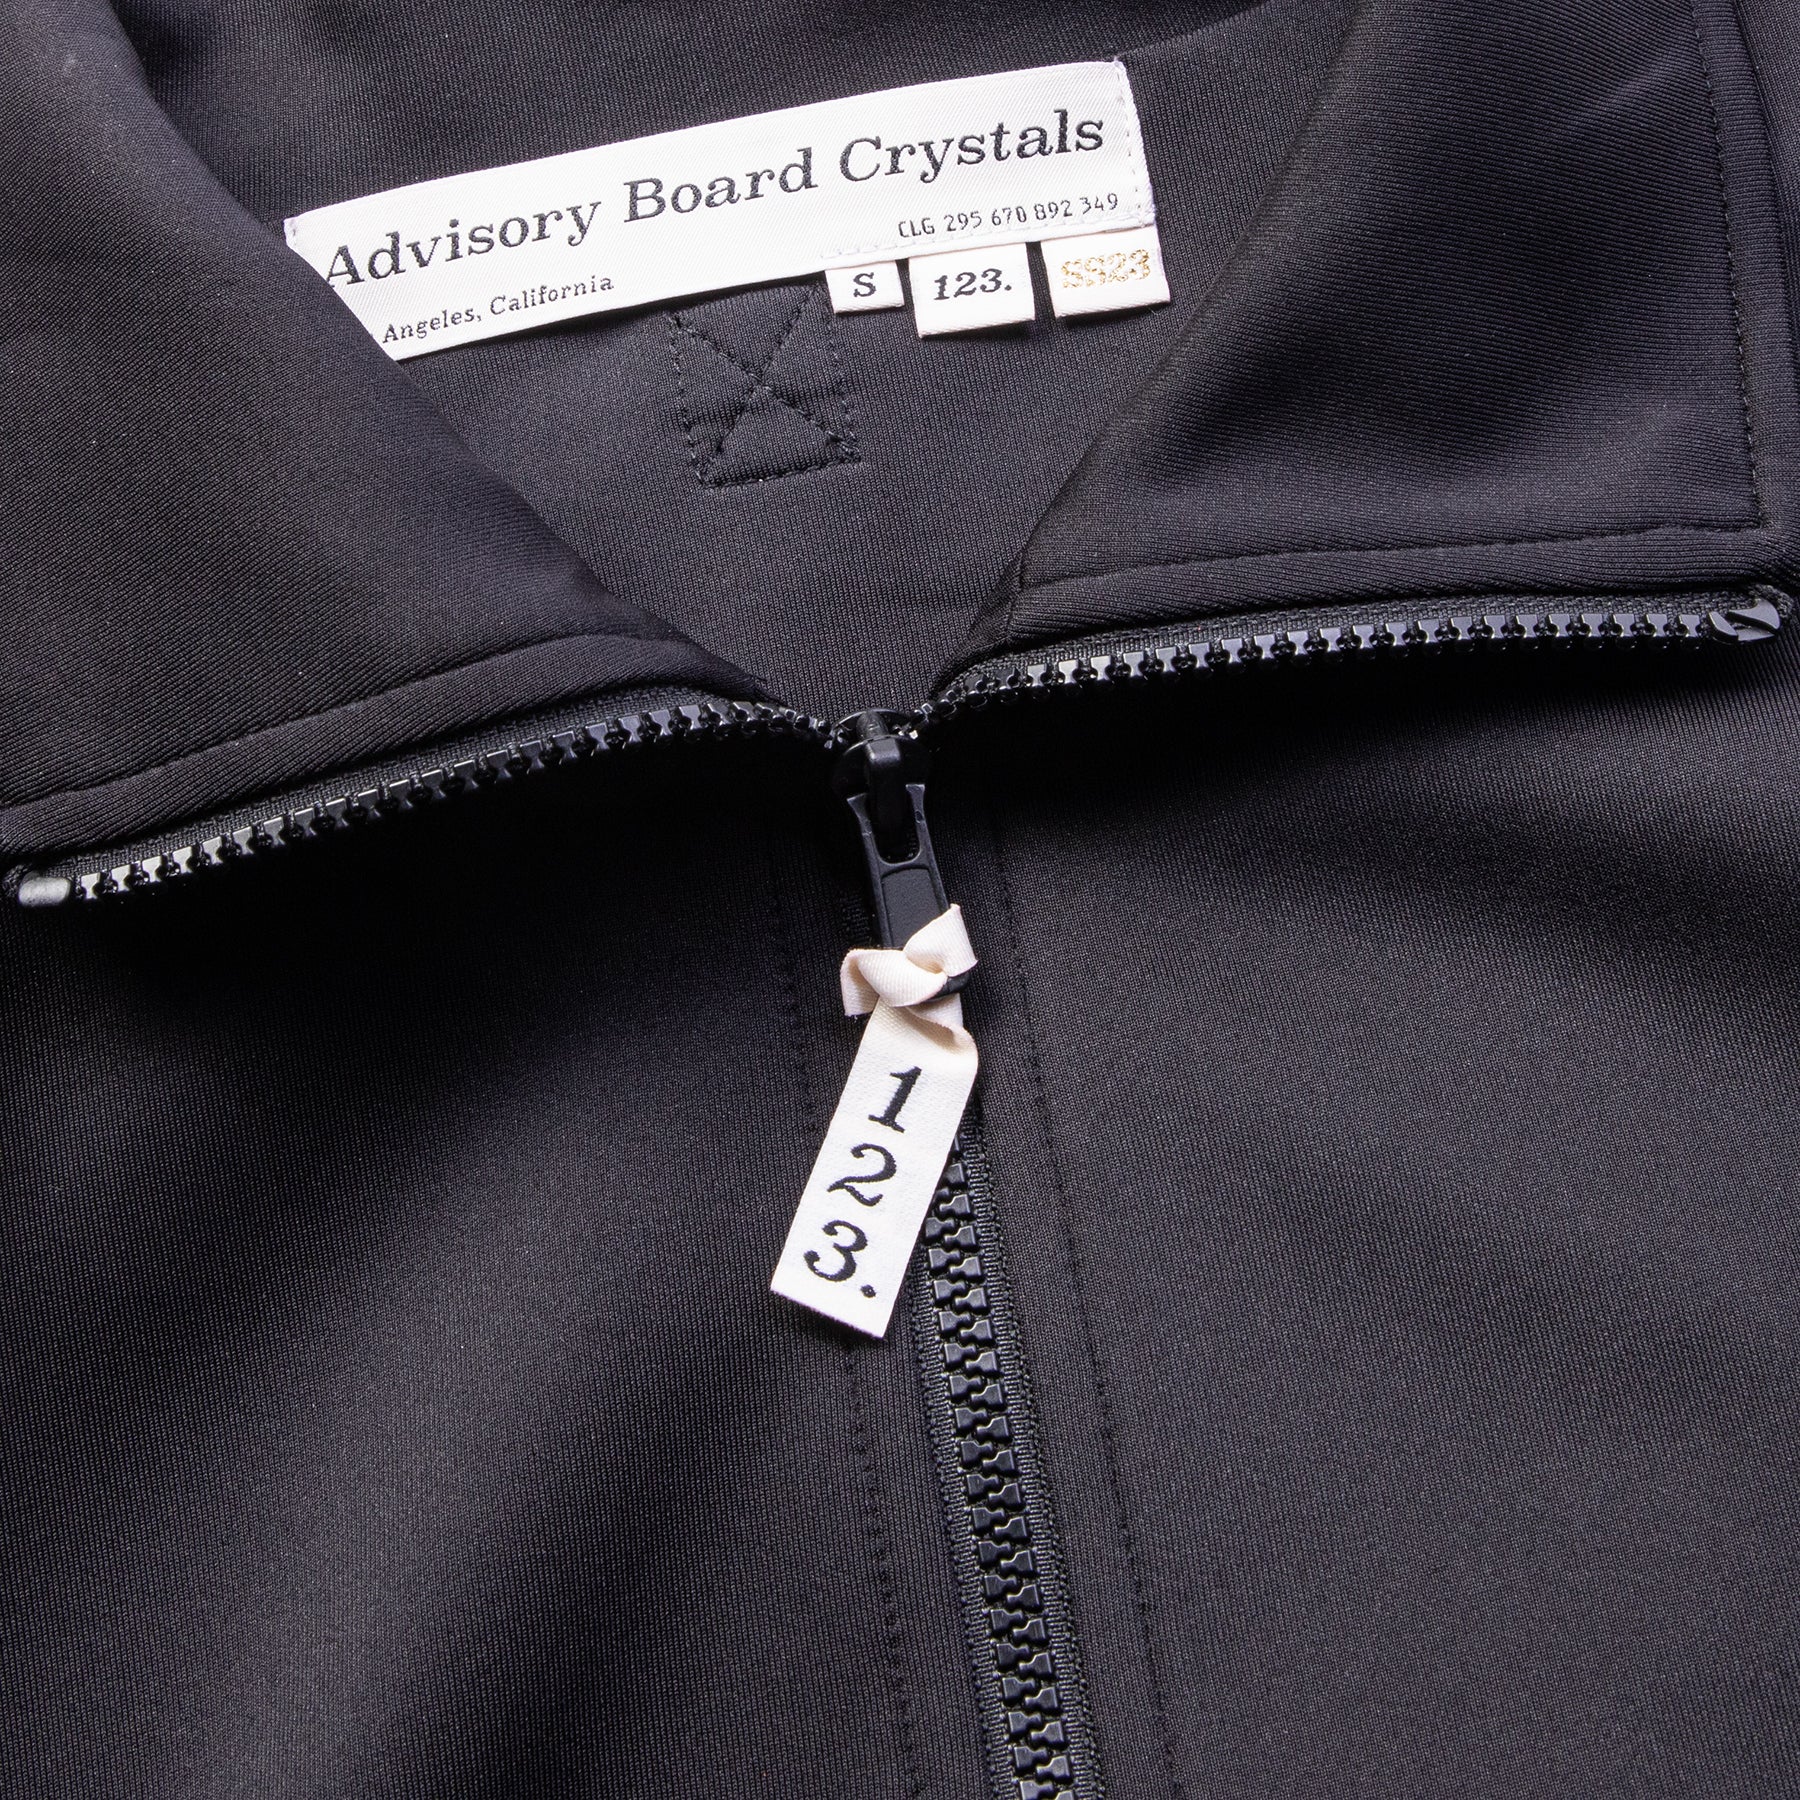 Advisory Board Crystals logo-patch star-print Bomber Jacket - Orange